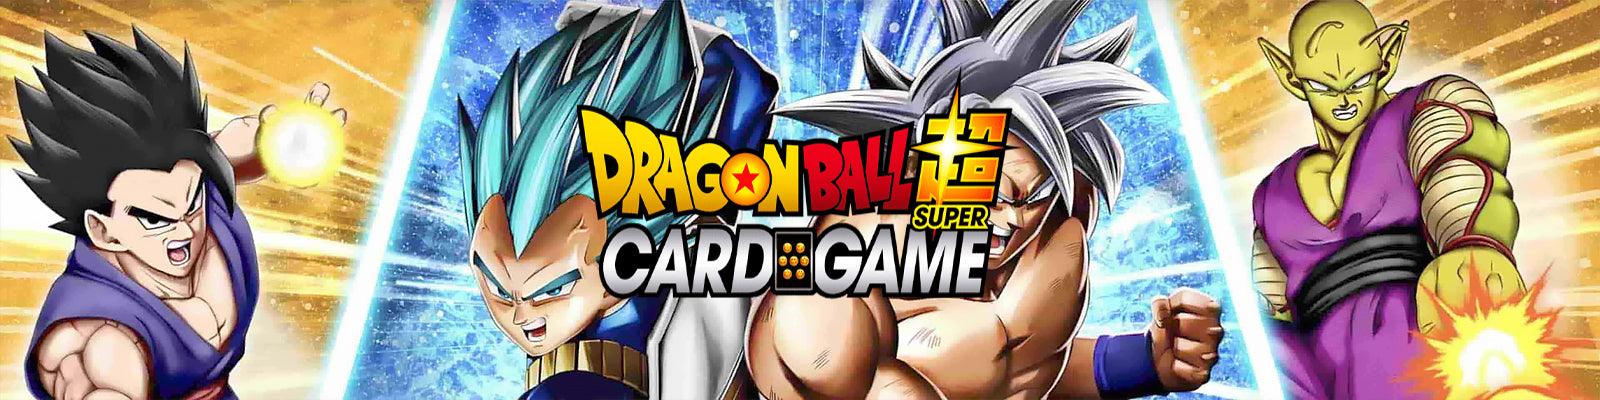 Dragon_Ball_Super_Image_Banner_Mobile - Romulus Games